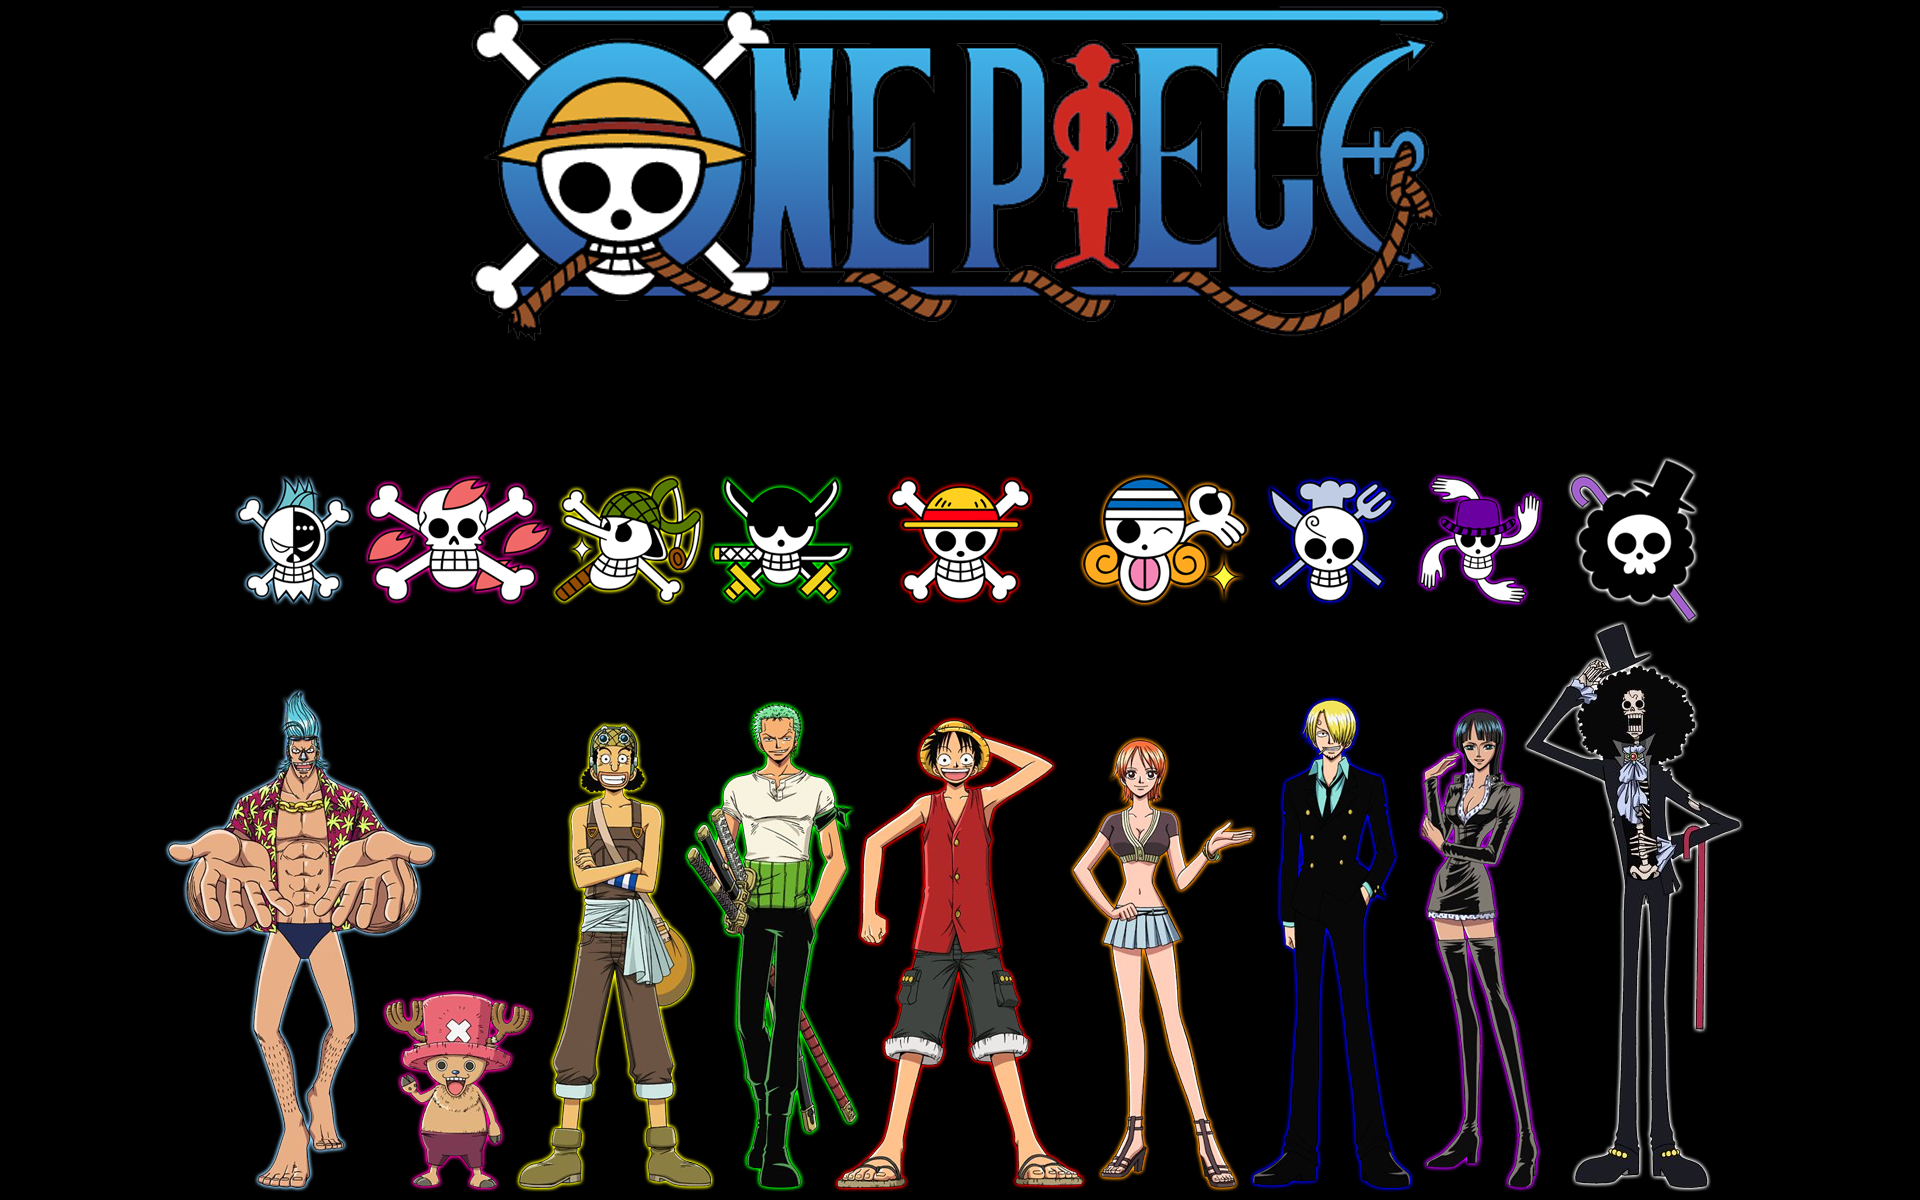 One Piece (anime) - desktop wallpaper